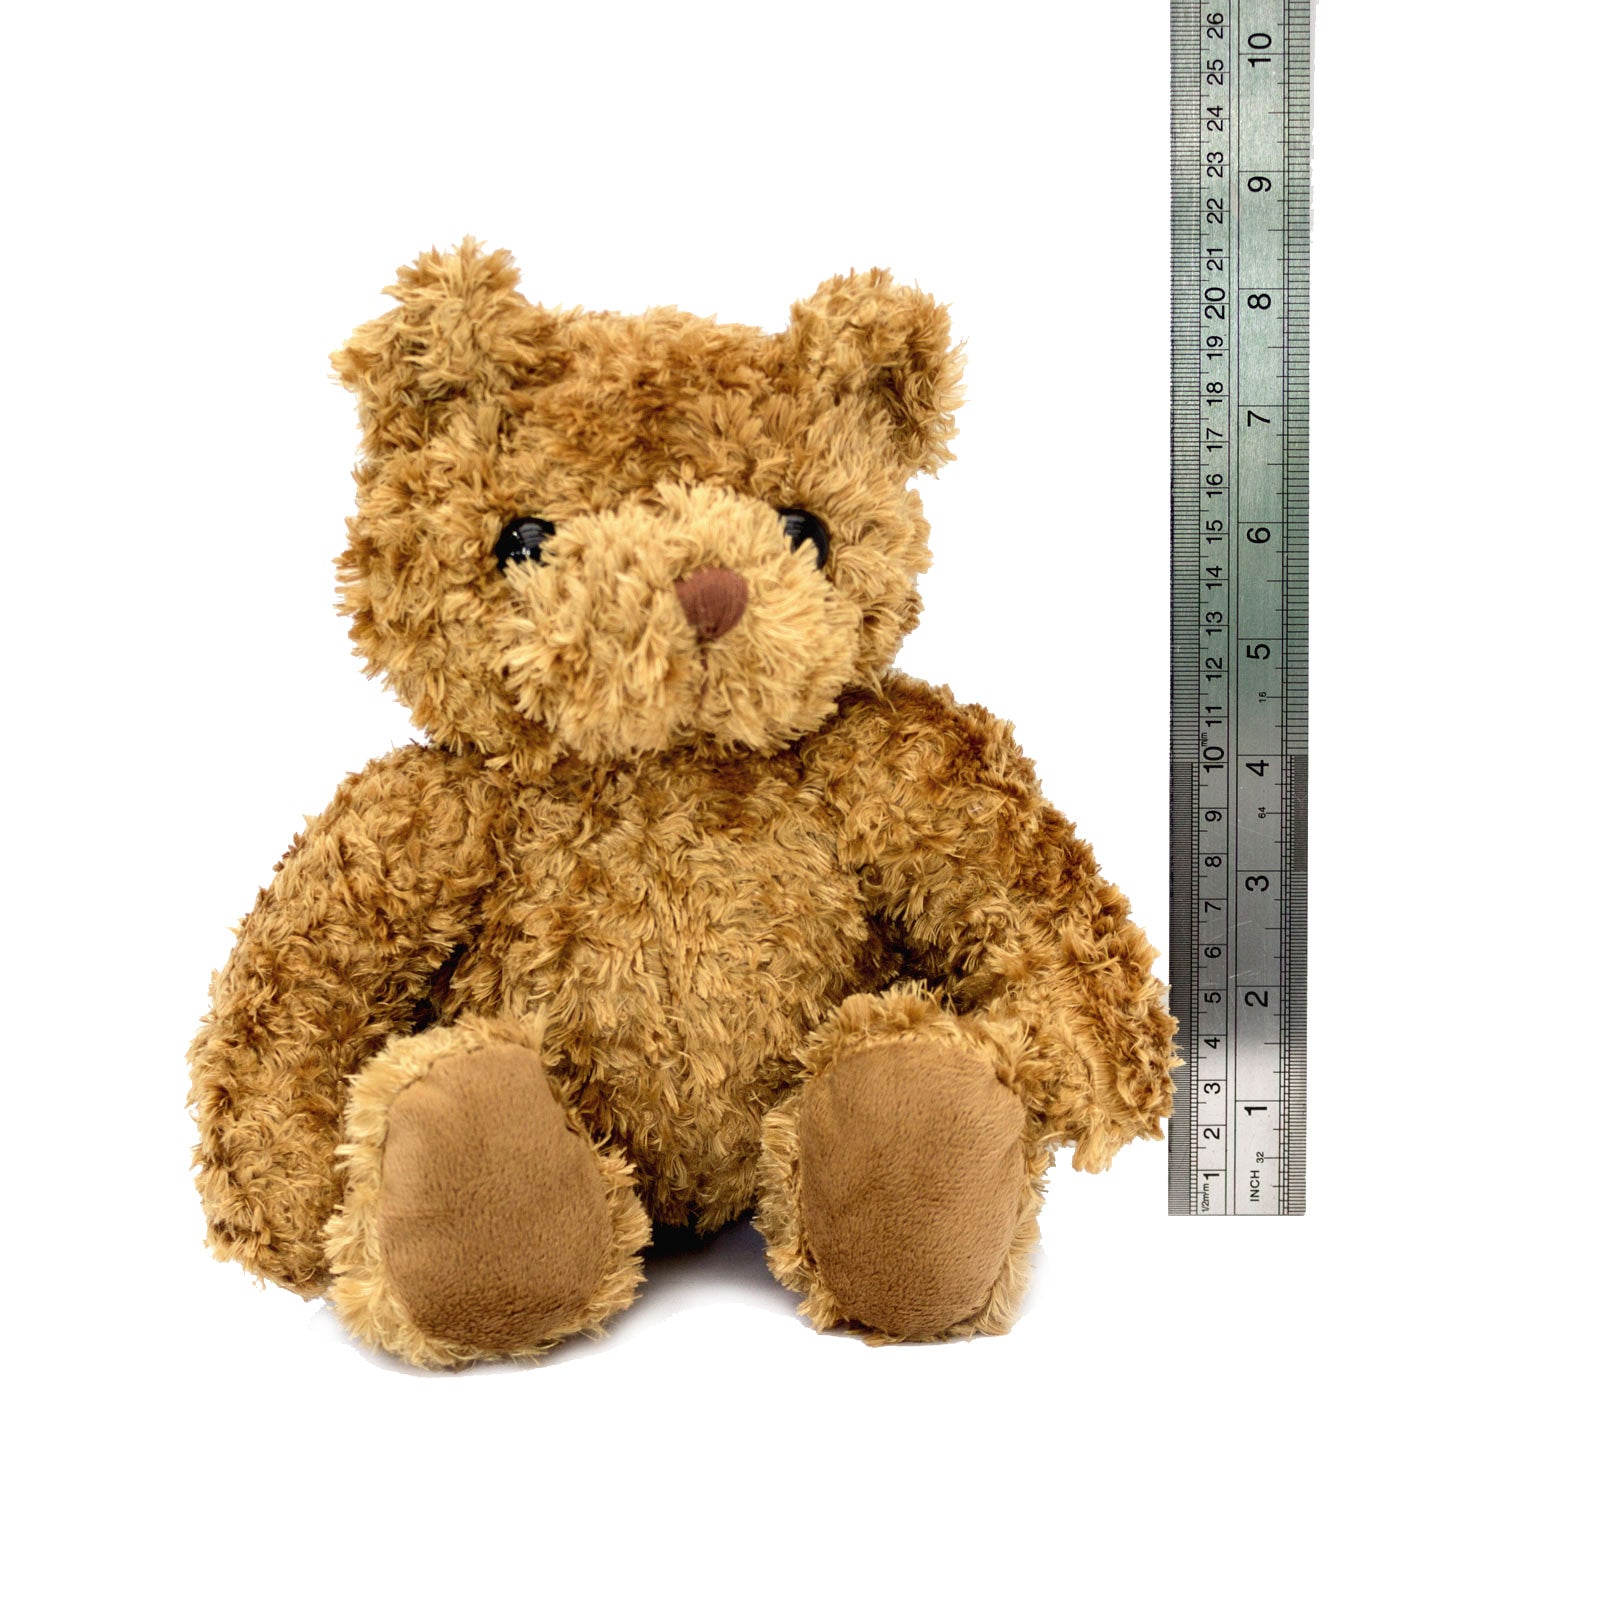 Get Well Soon Cullan - Teddy Bear